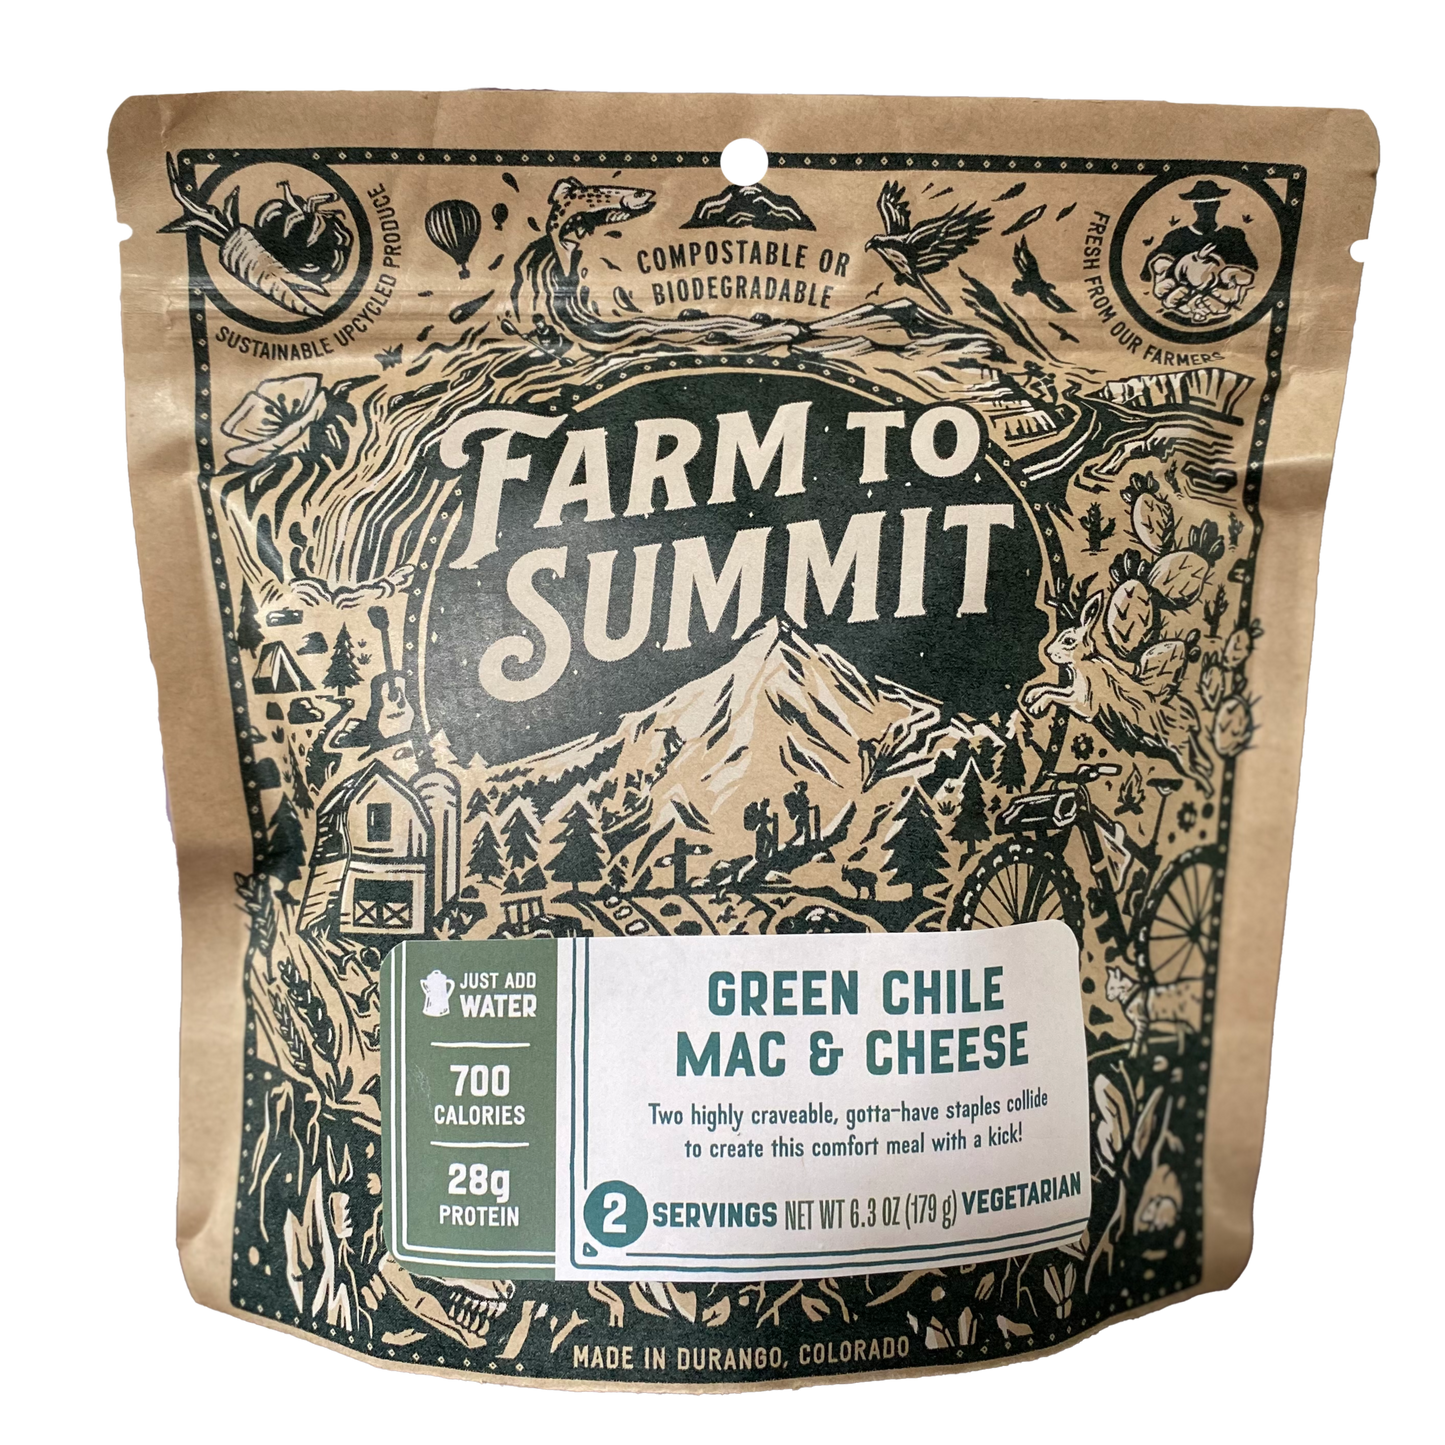 Green Chile Mac & Cheese